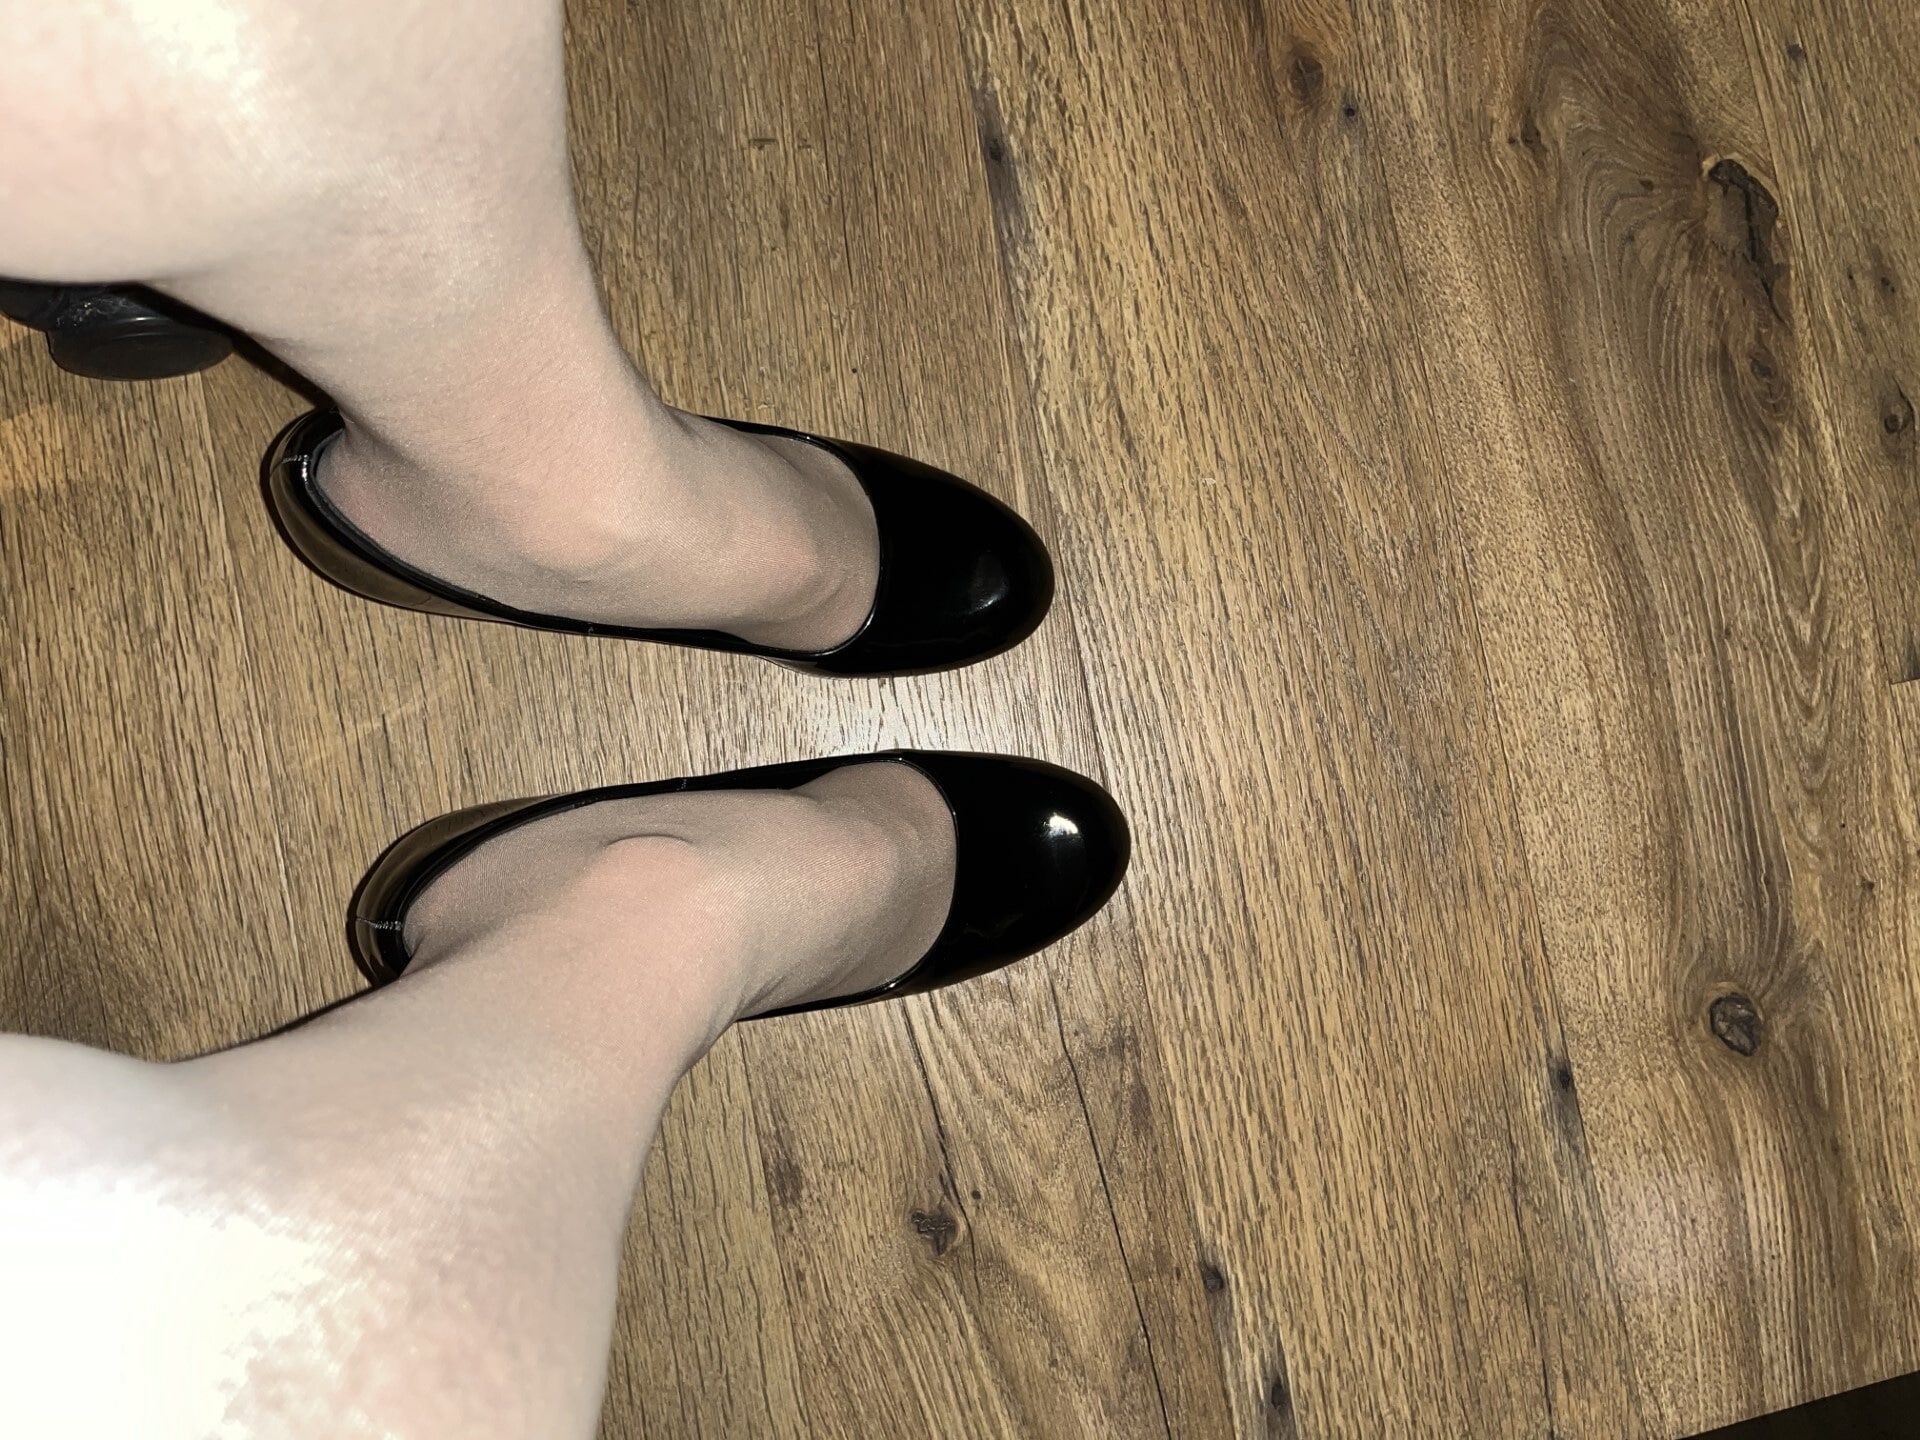 Pantyhose feet